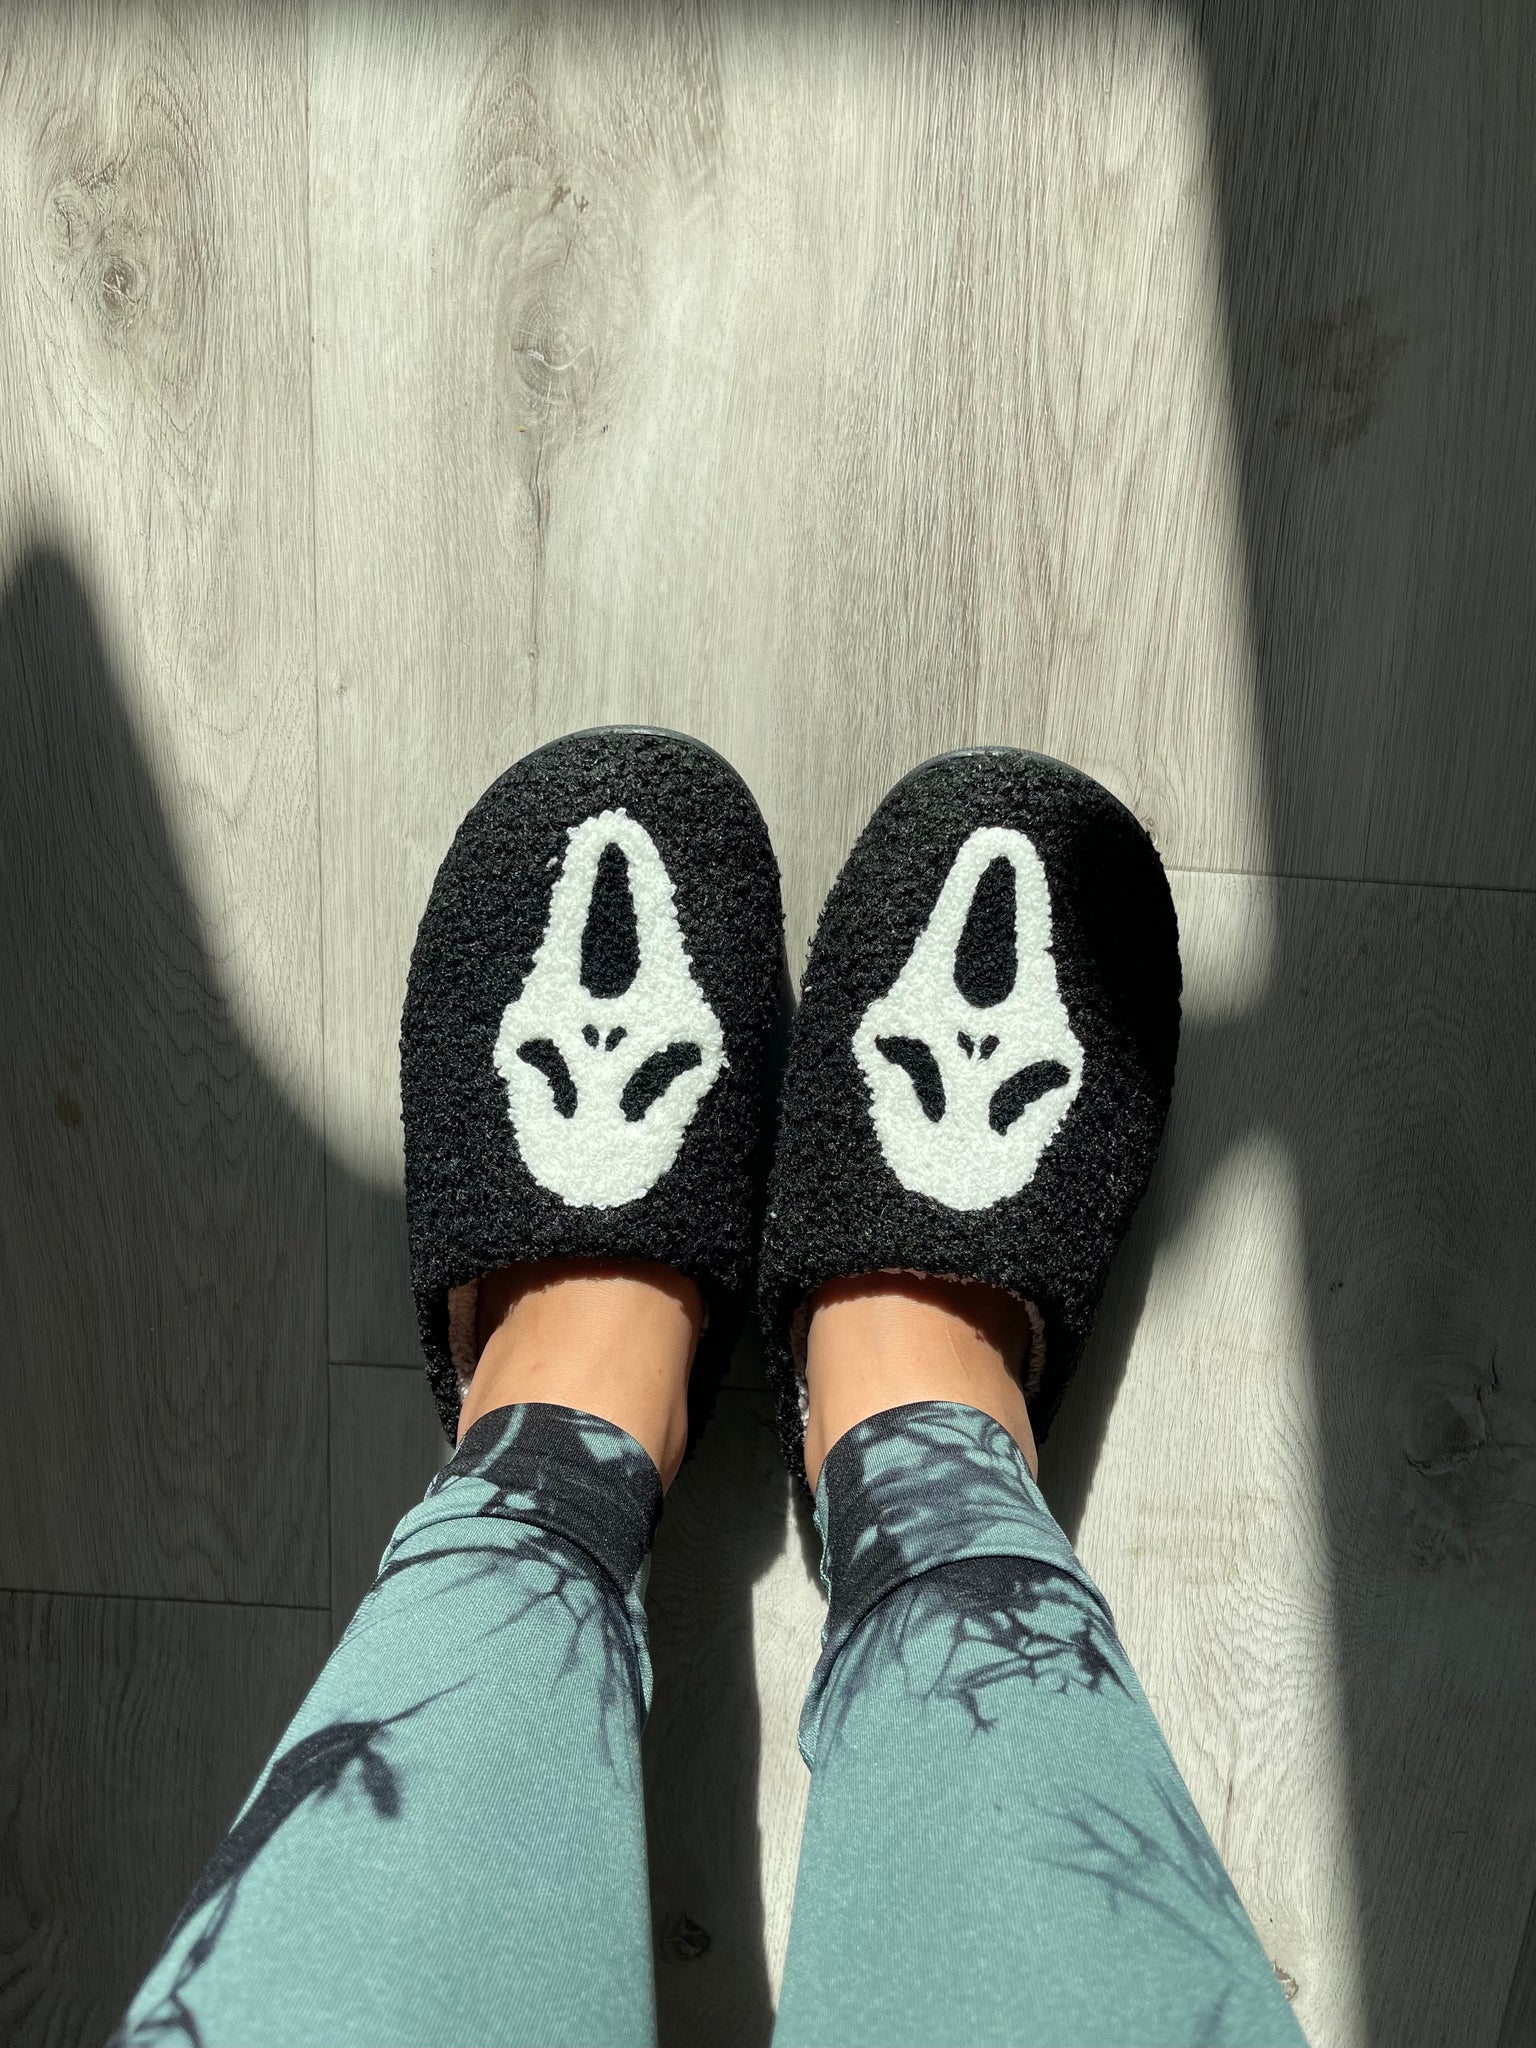 Scream slippers